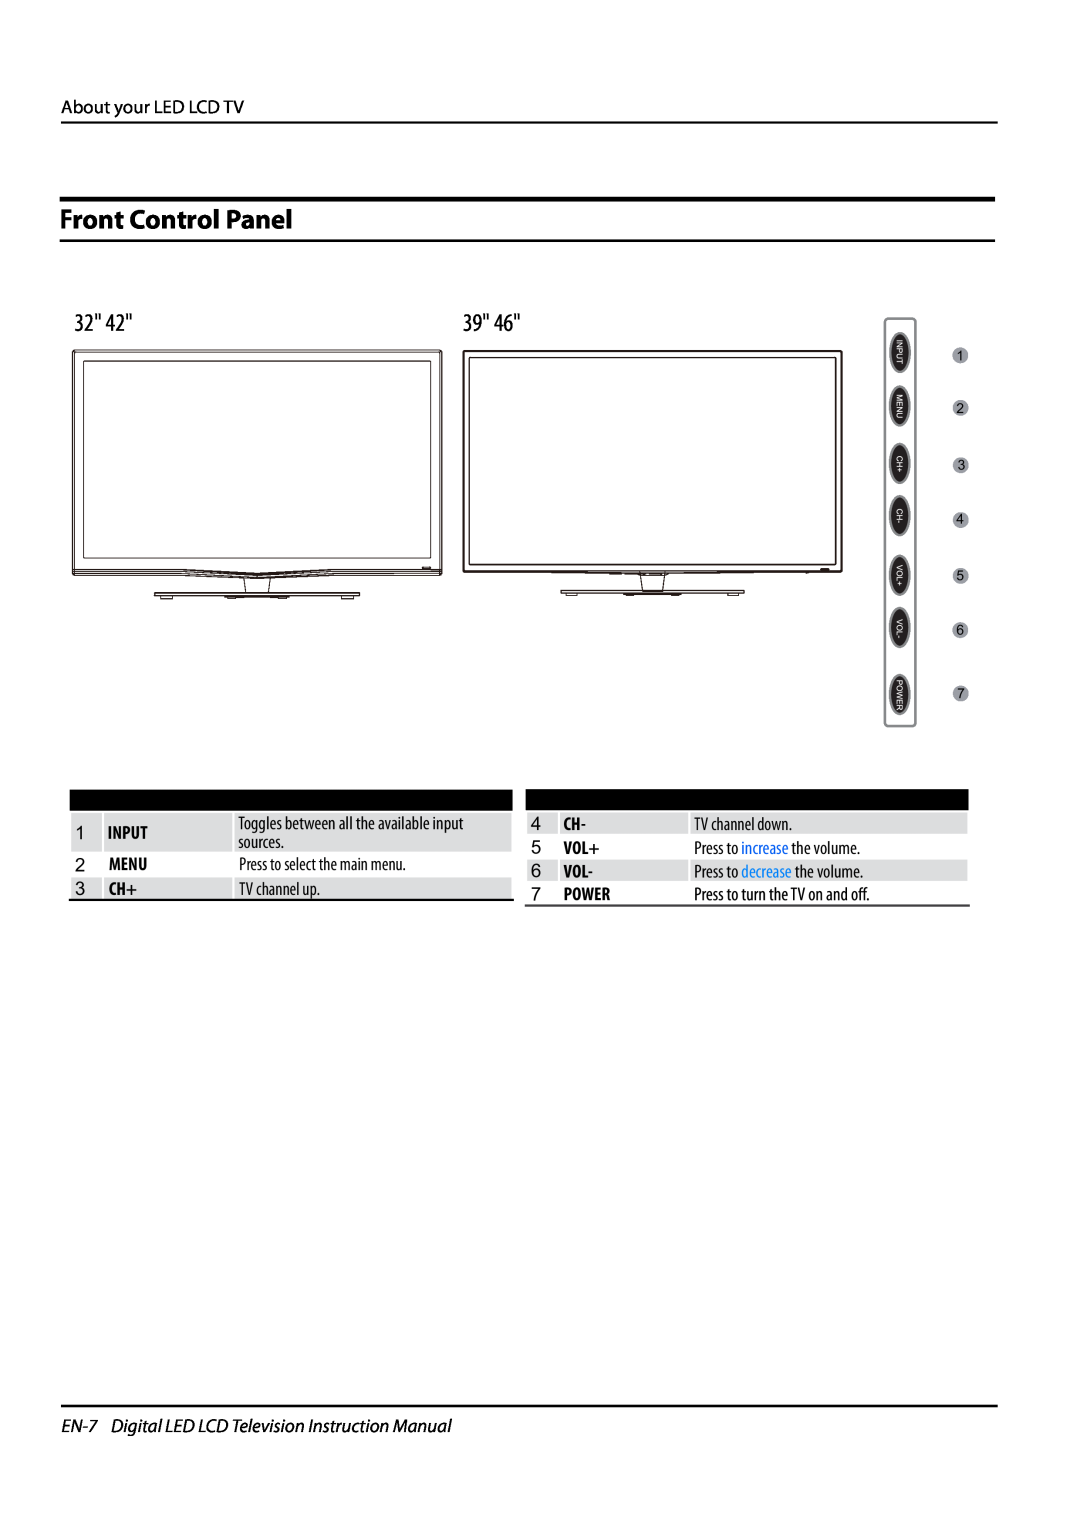 Haier LET42T1000HF Front Control Panel, Input, Menu, Vol+, Power, EN-7 Digital LED LCD Television Instruction Manual 